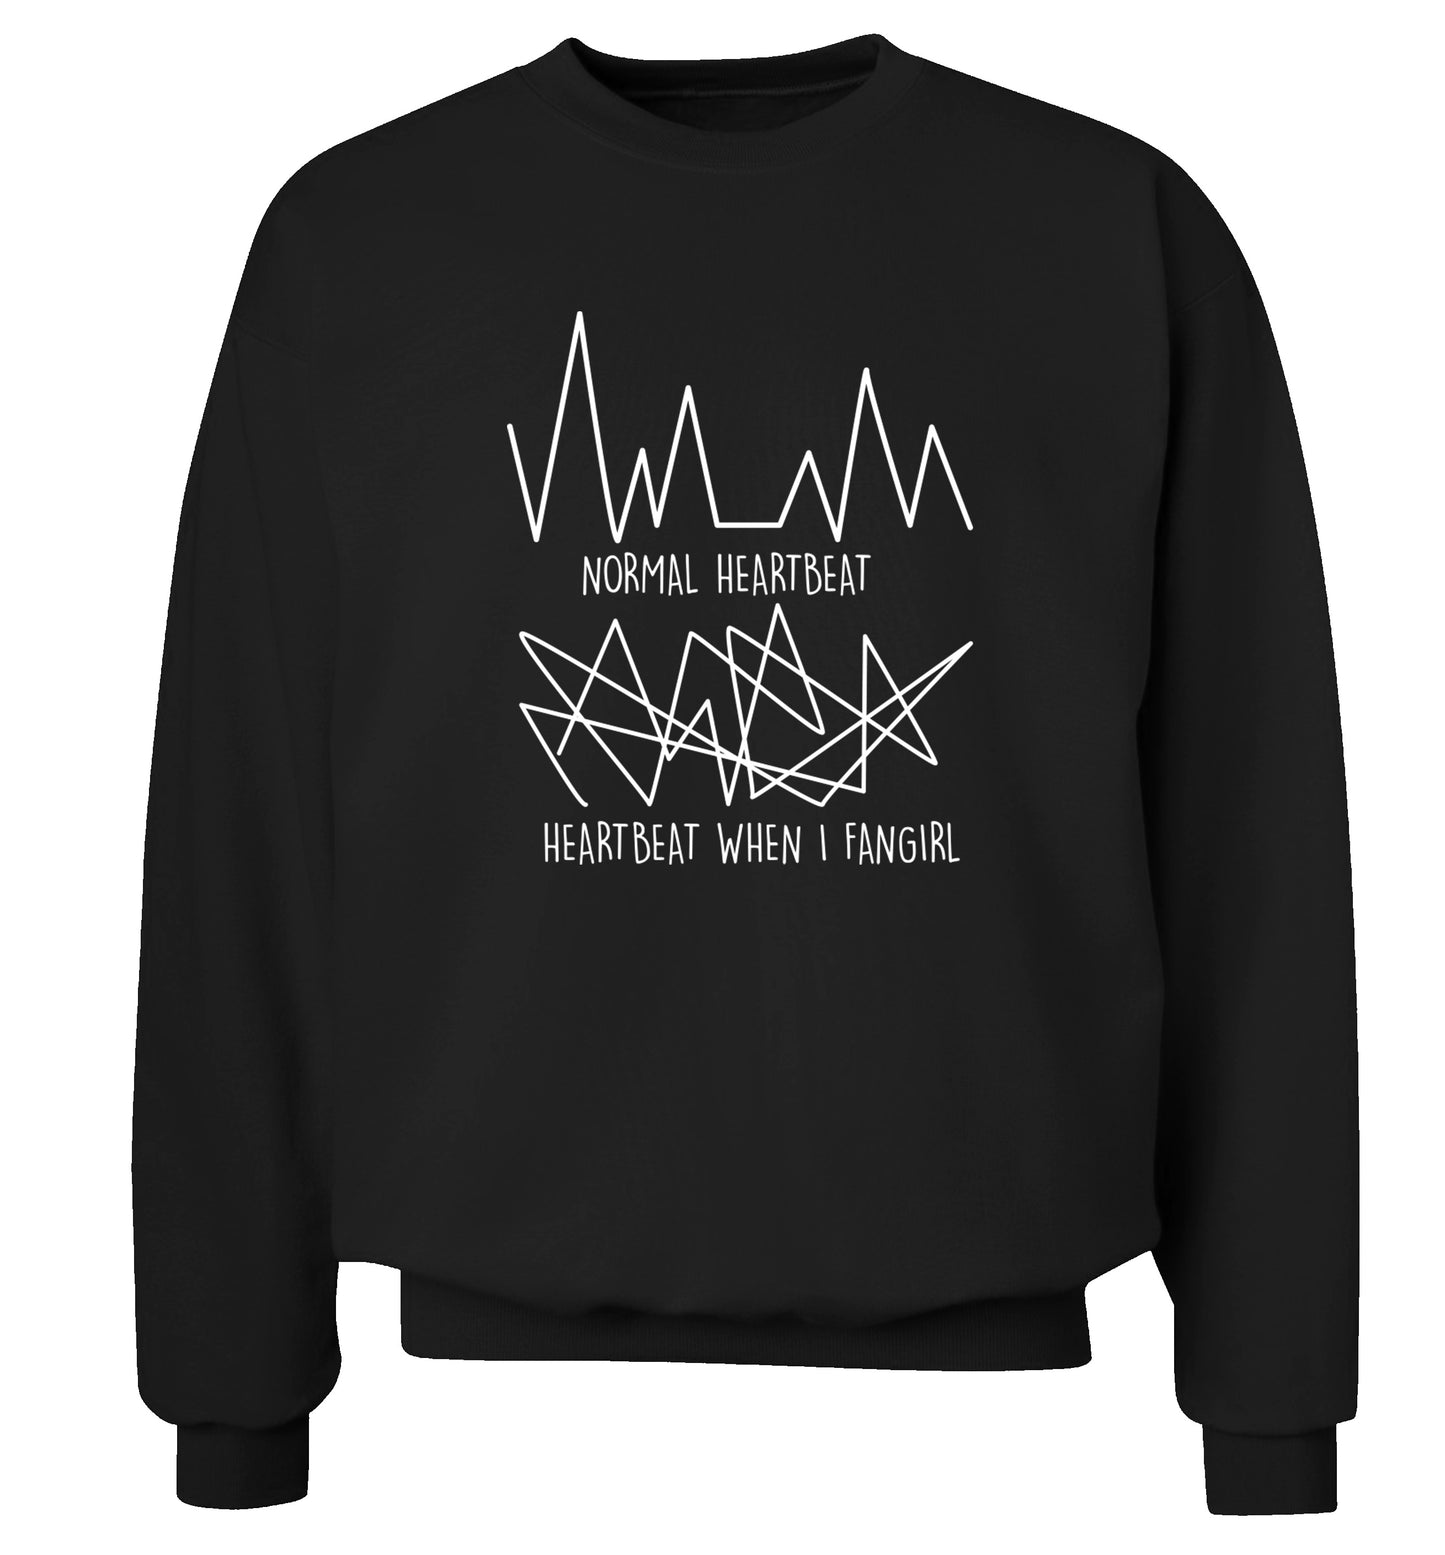 Normal heartbeat heartbeat when I fangirl Adult's unisex black Sweater 2XL